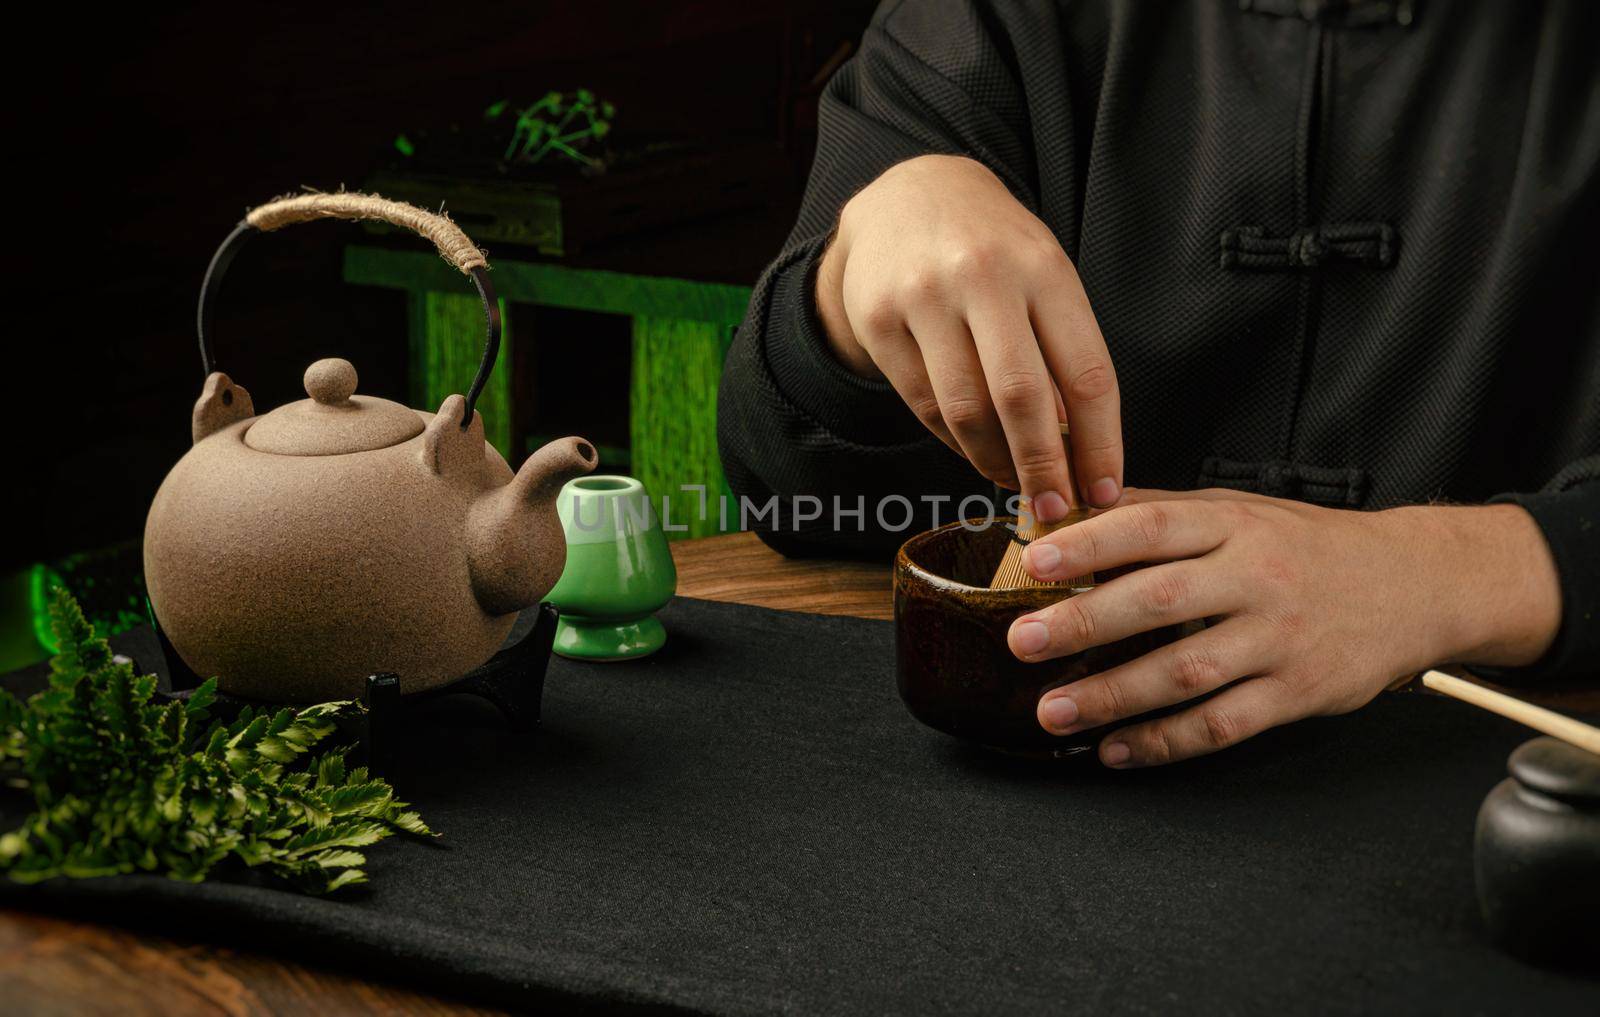 traditional matcha tea preparation by Rotozey